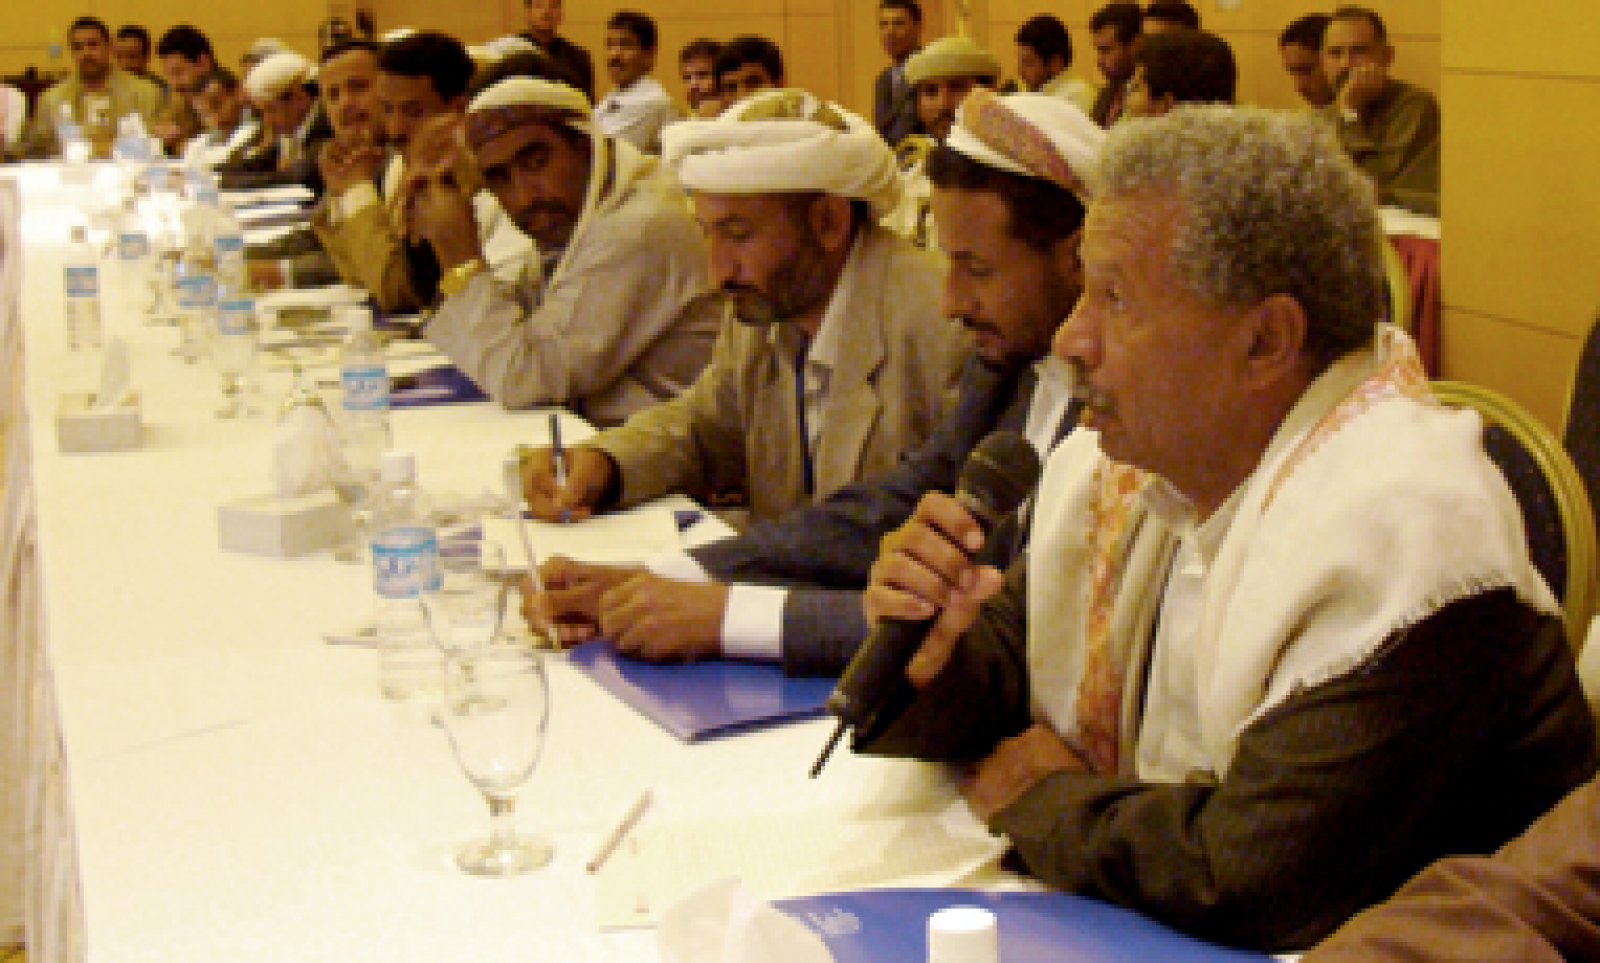 Yemen Program Aims to End Violence, Promote Safe Schools